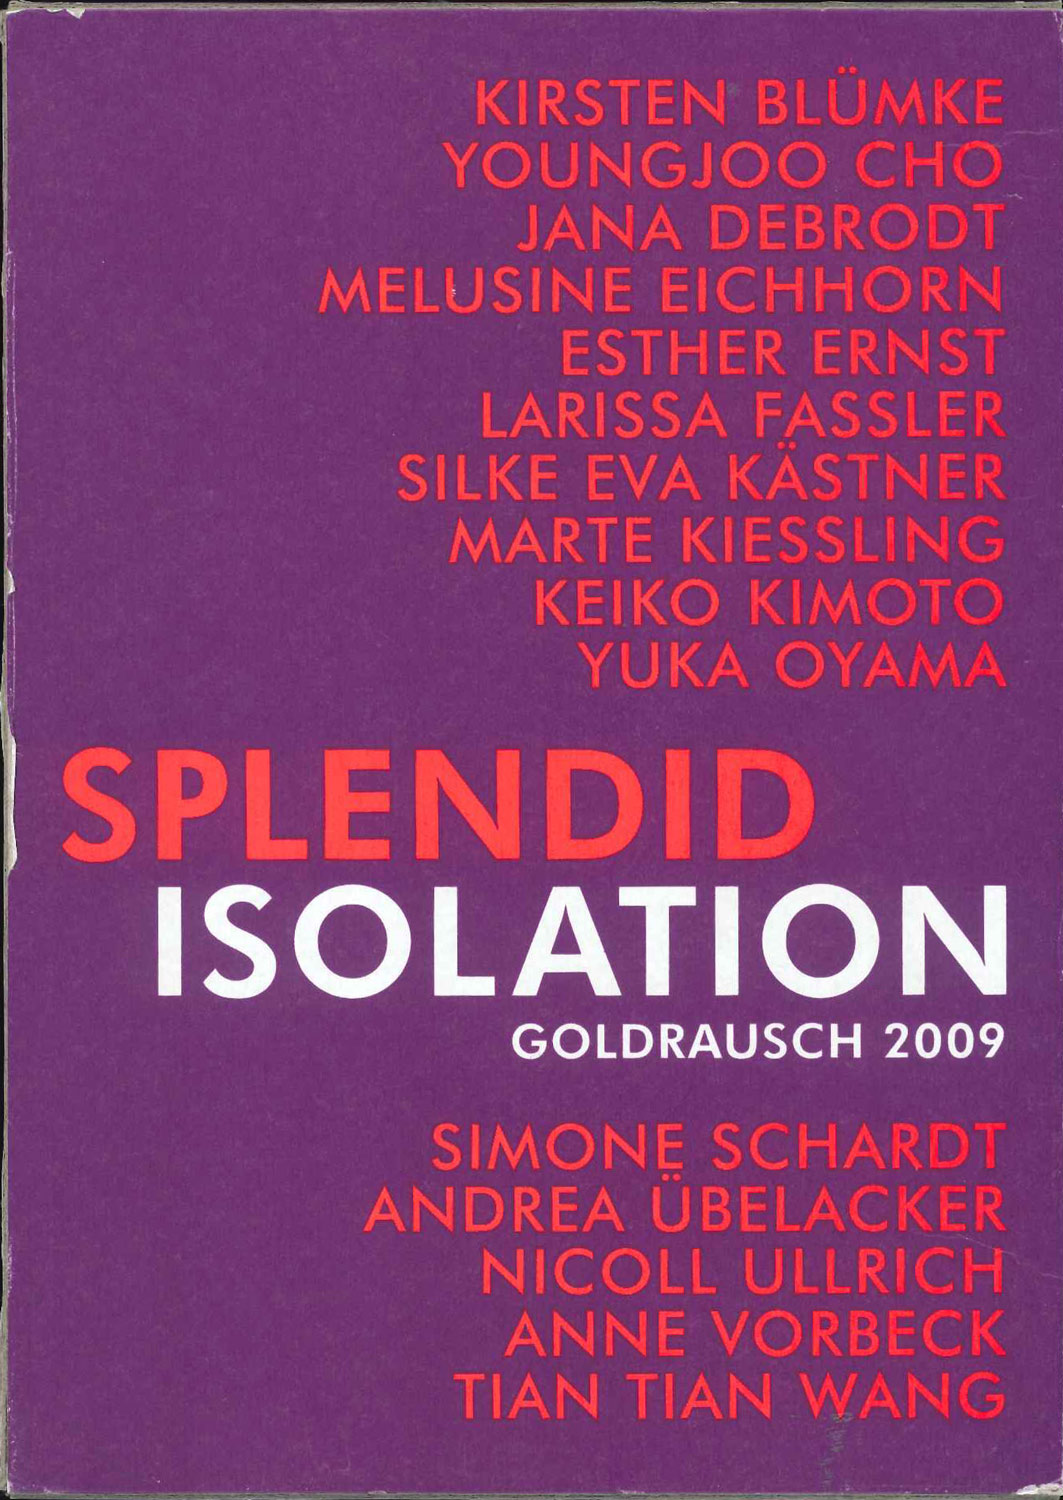 Jubiläum Goldrausch 30 Jahre, Katalog 2009